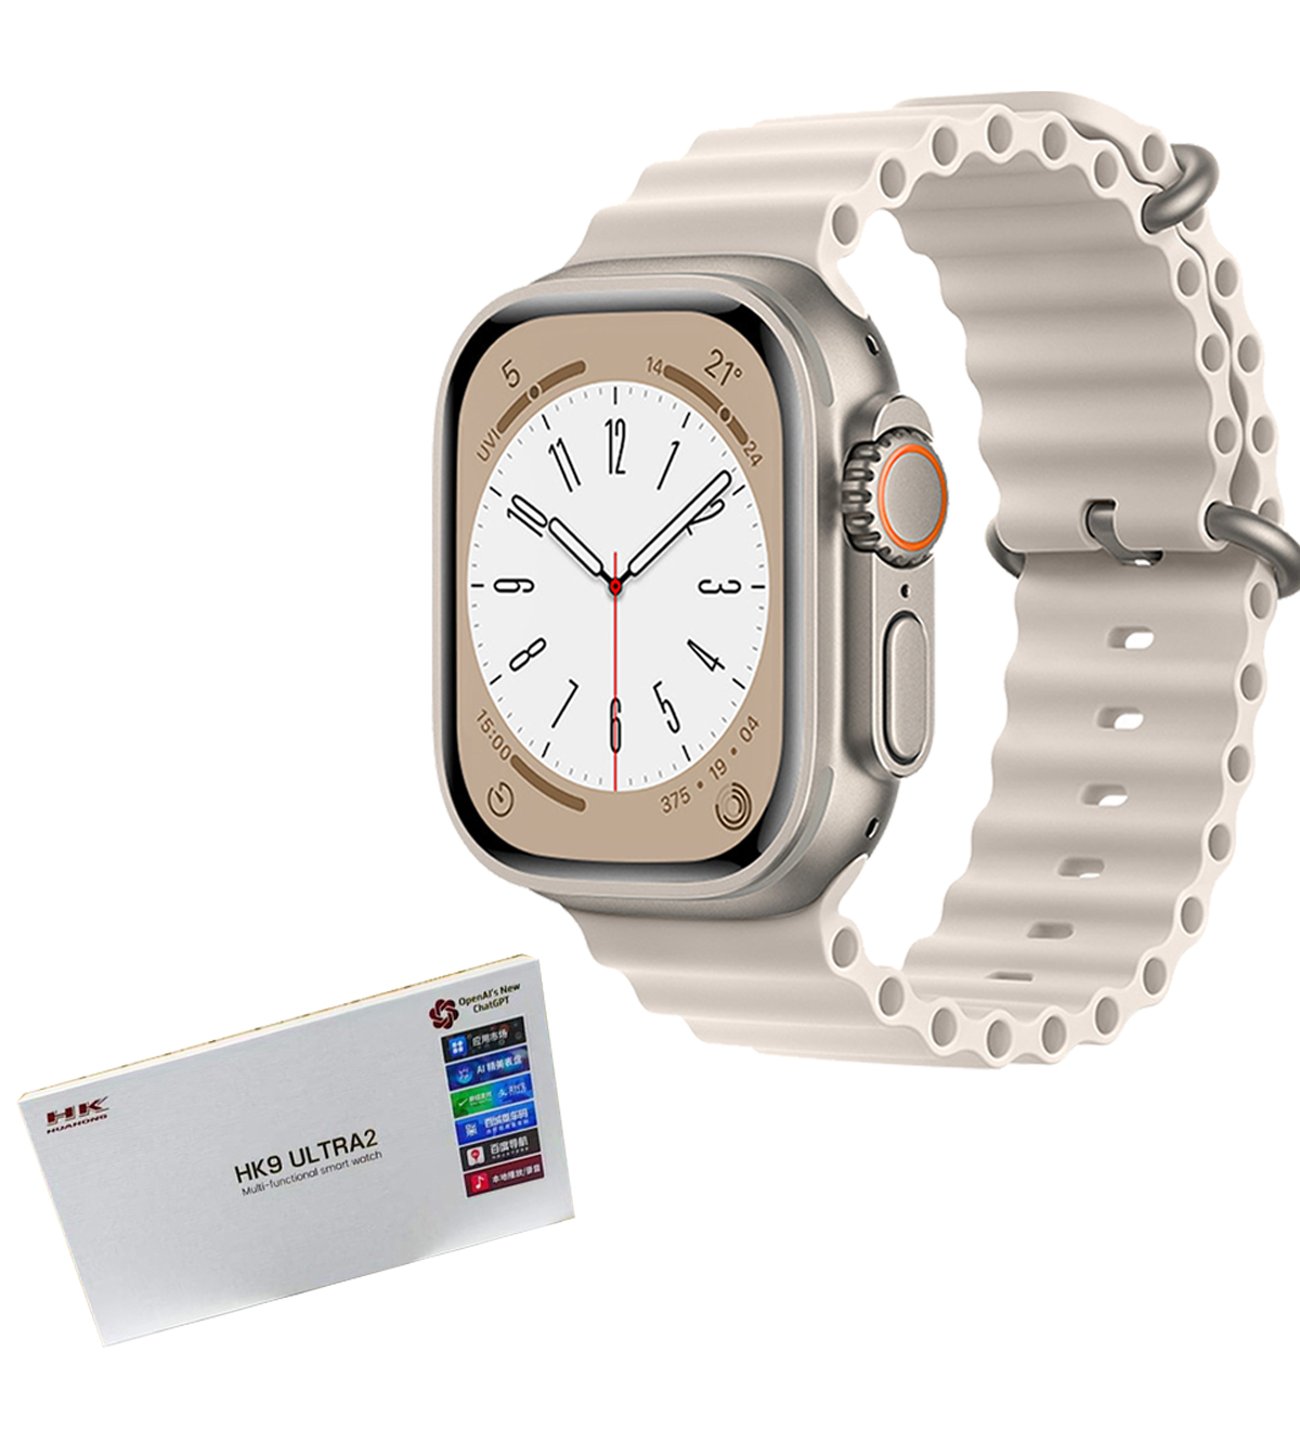 HK9 ULTRA 2 Multifunctional smart watch #trending #trandingiphone #sma